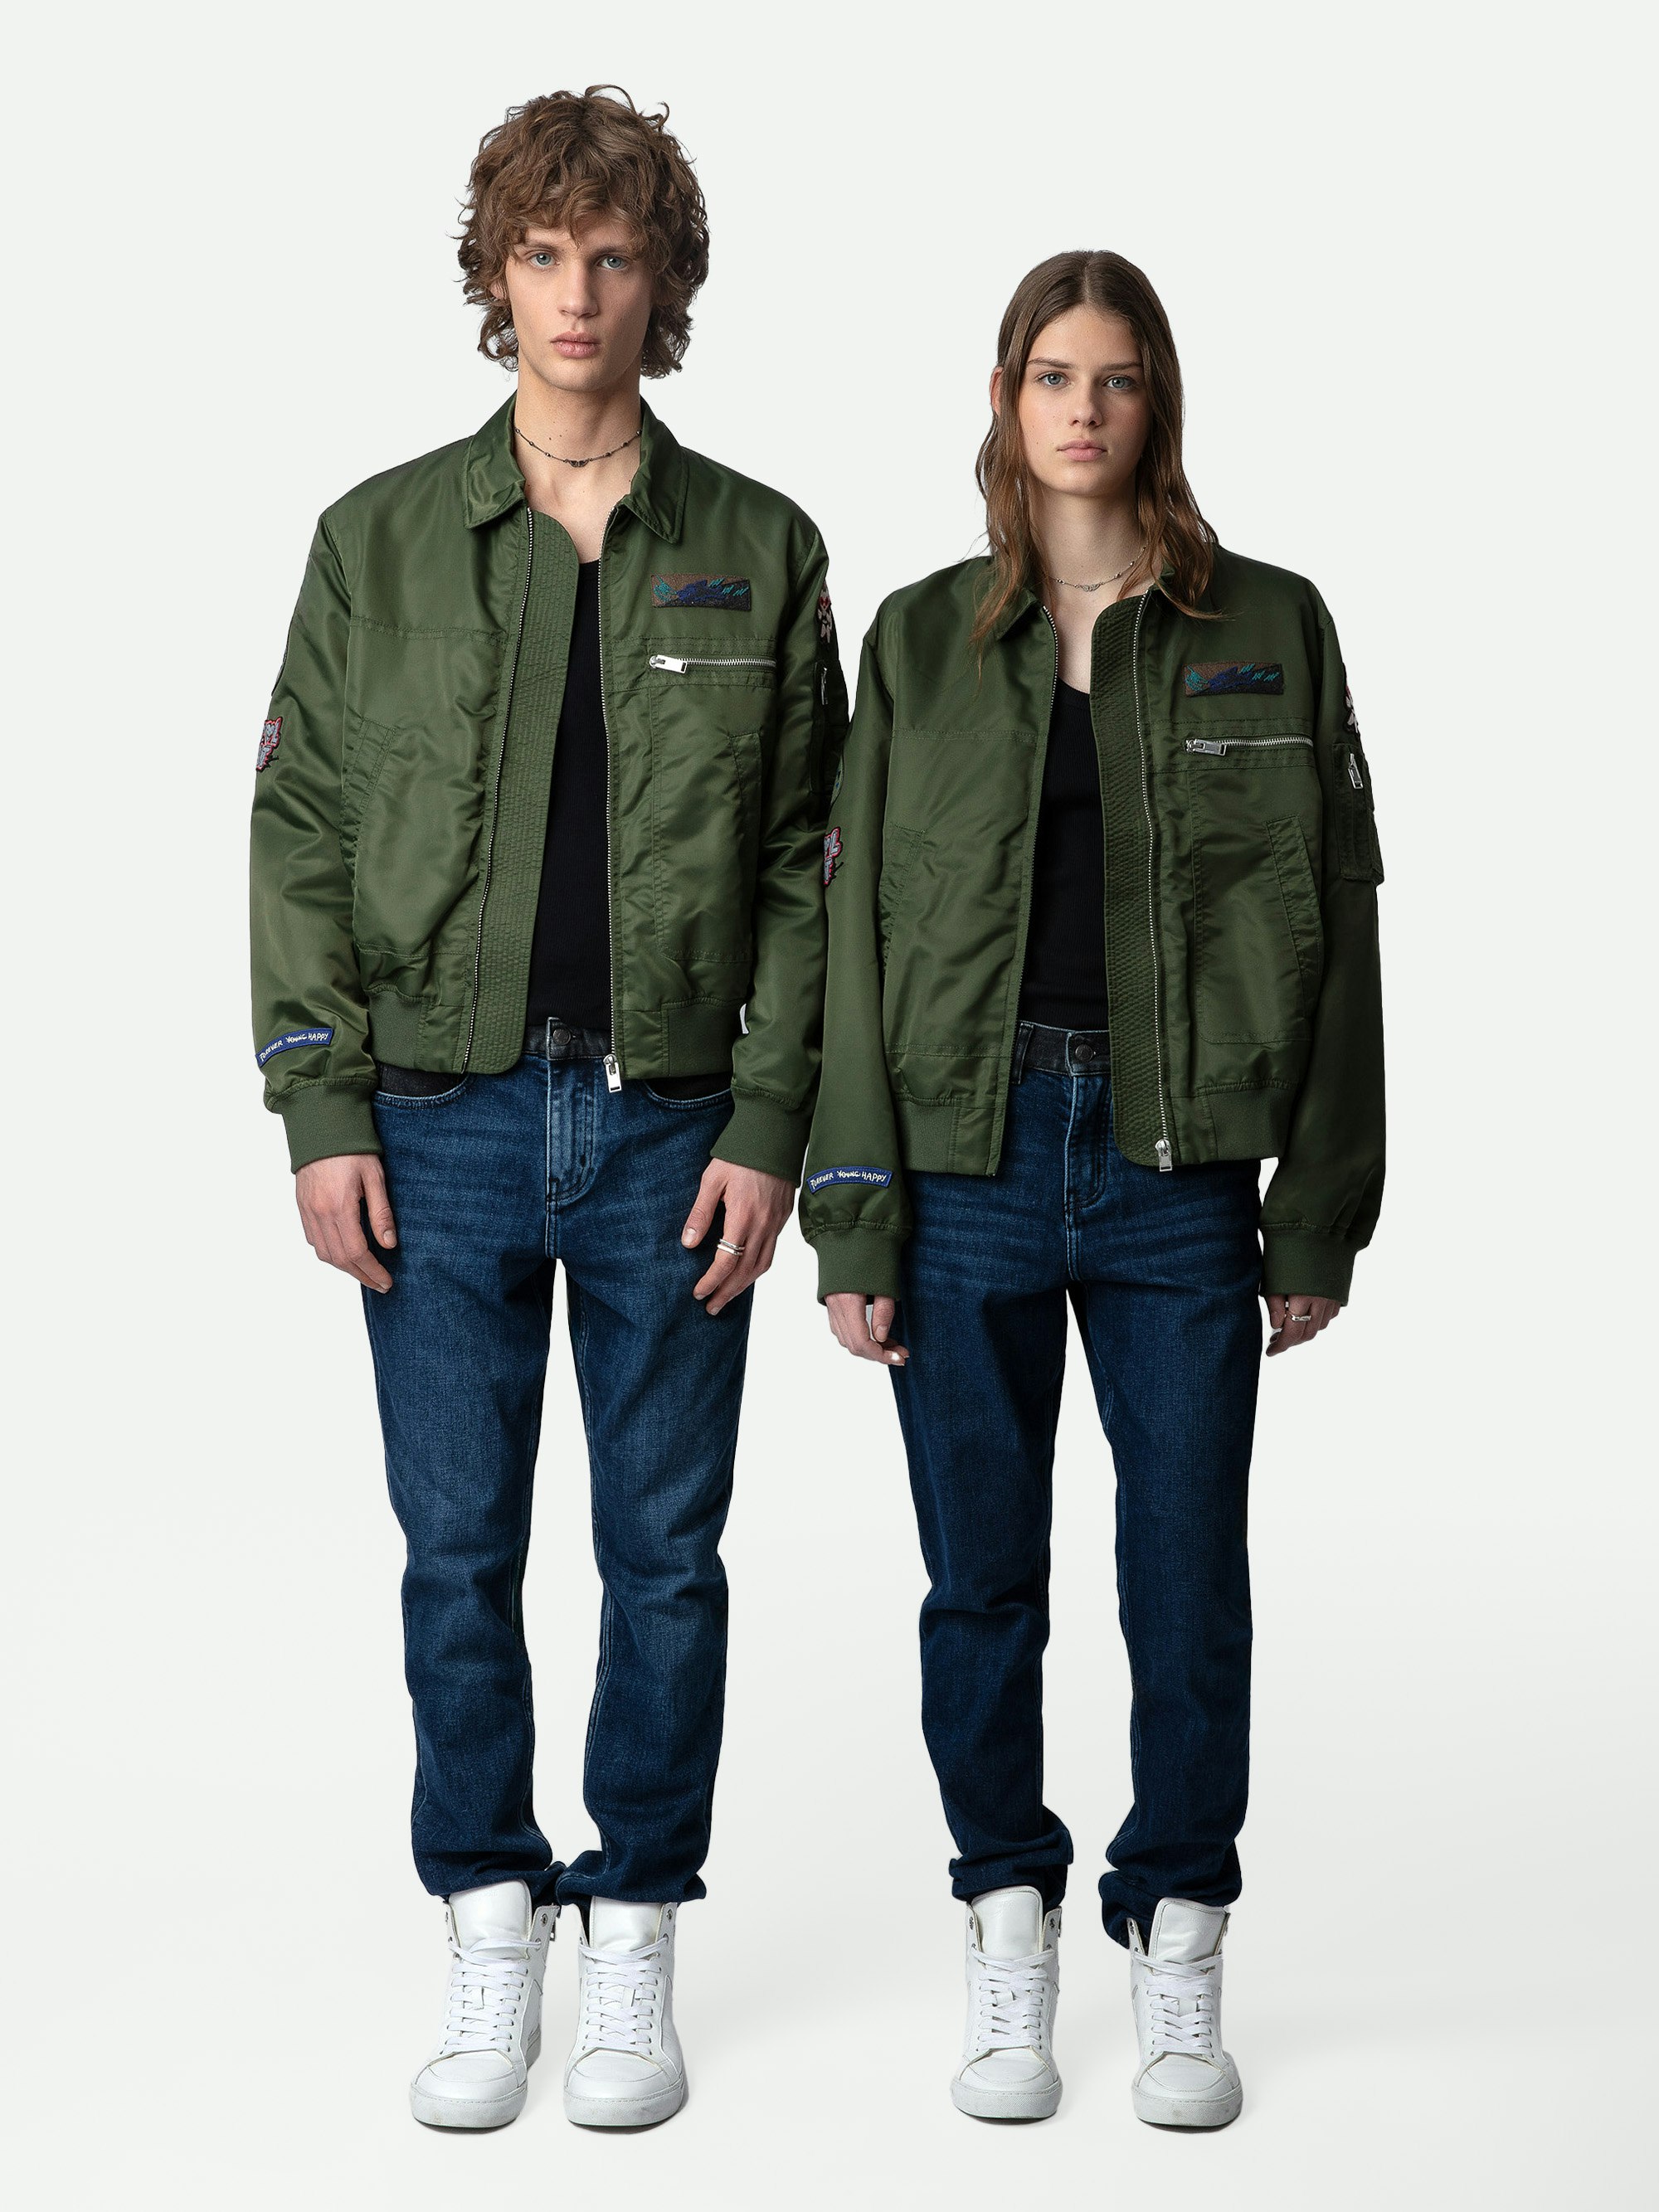 Bolid Jacket - Khaki jacket with zip fastening, pockets and customized details designed by Humberto Cruz.